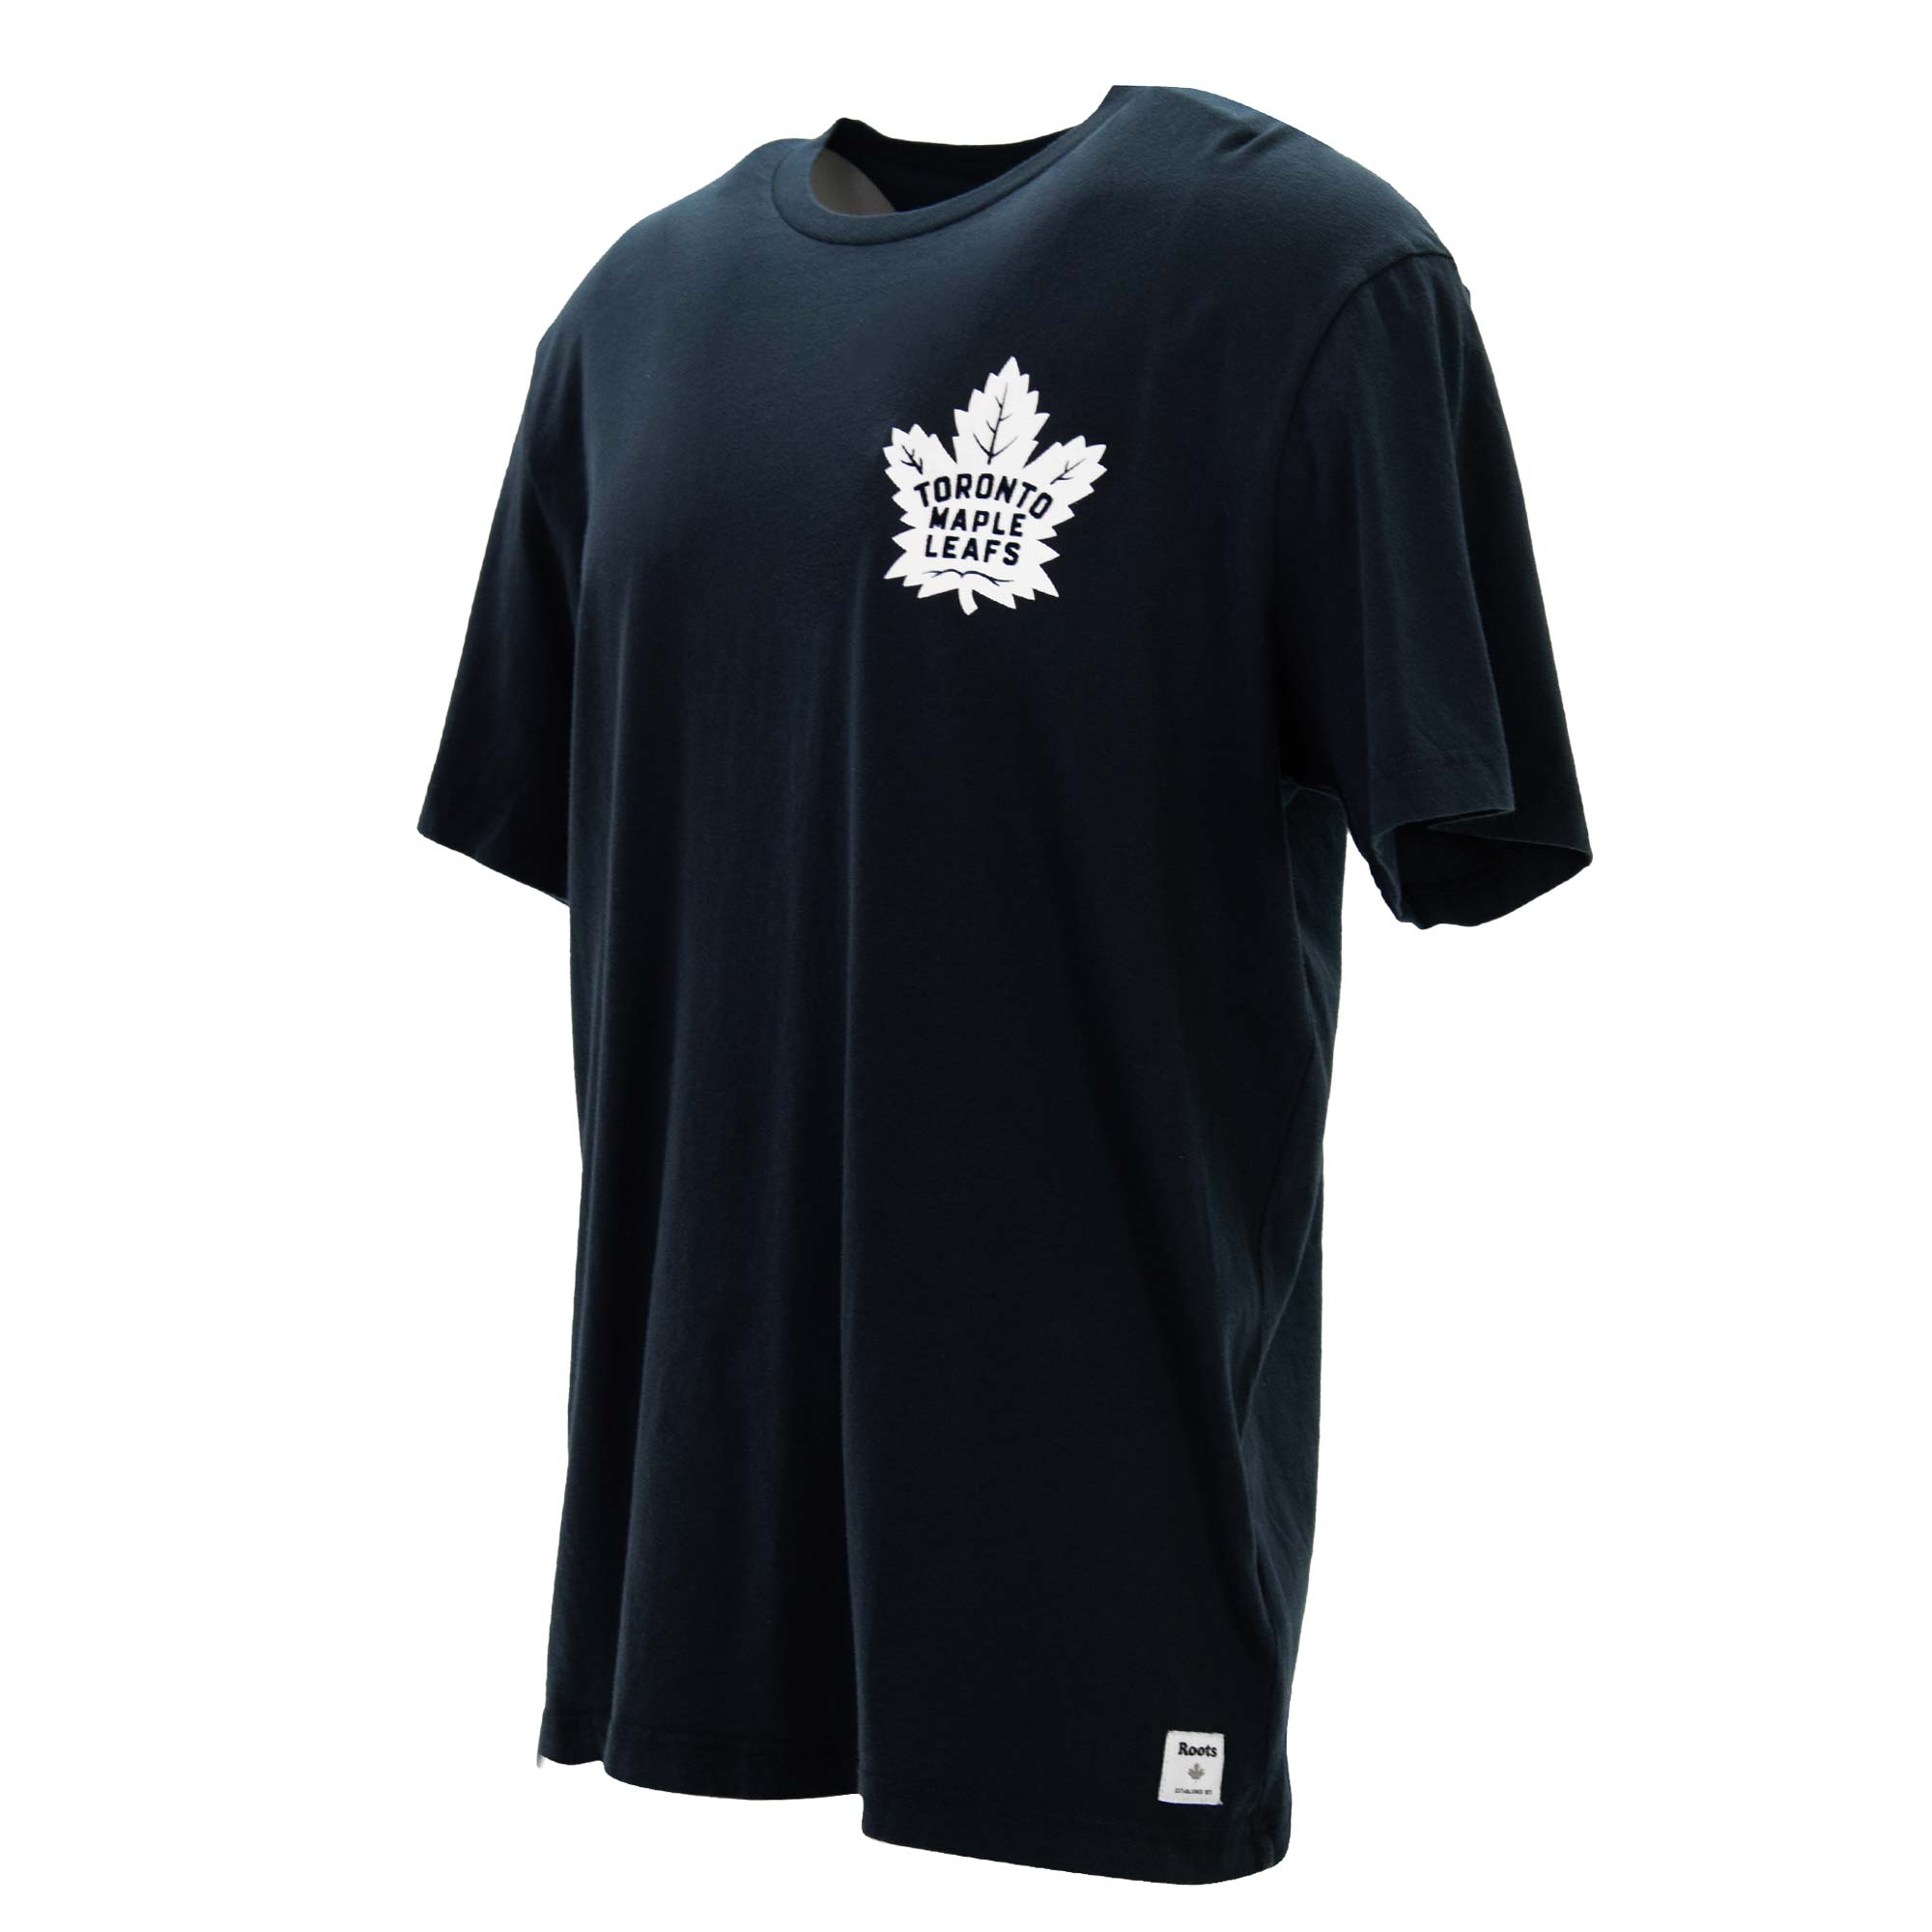 Maple Leafs 47 Brand Men's Walk Tall Tee – shop.realsports